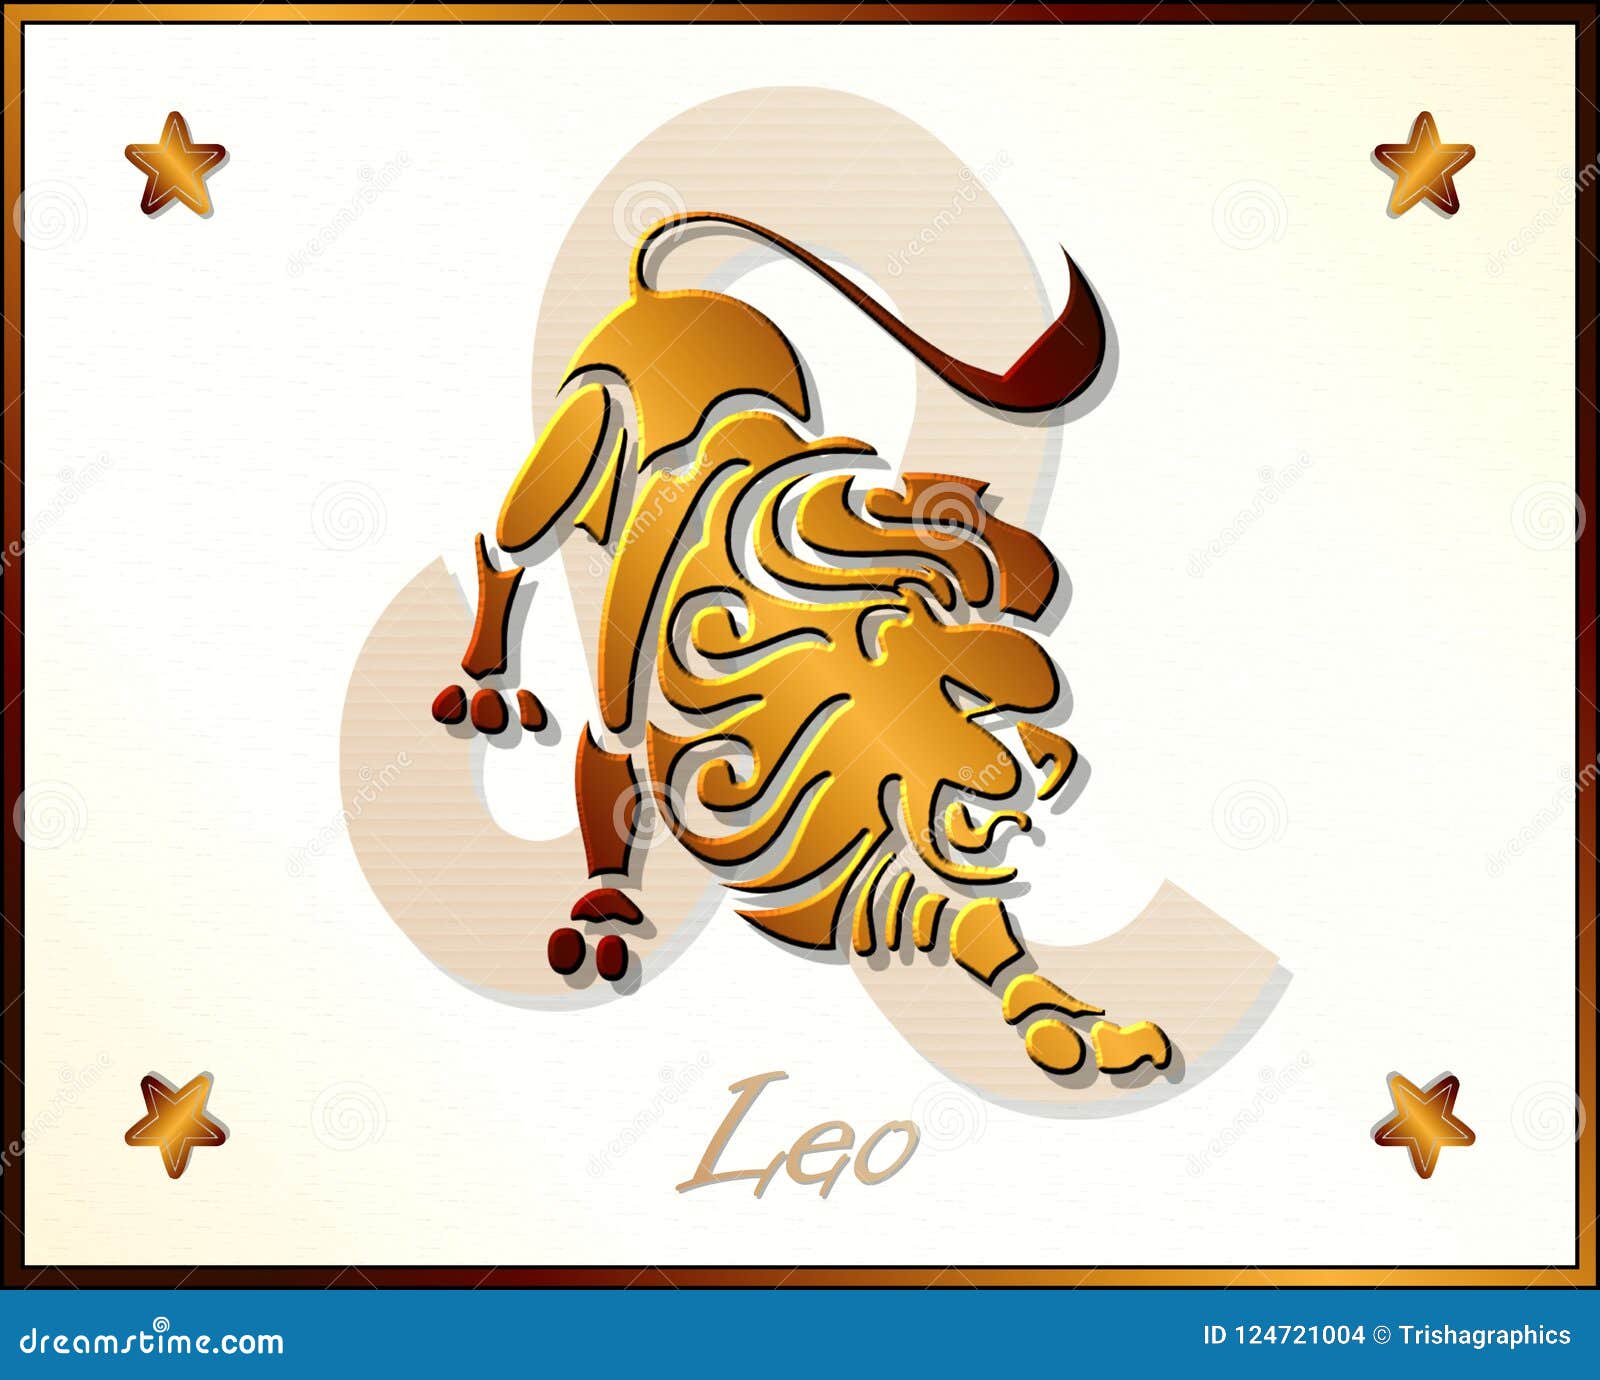 leo zodiac star sign